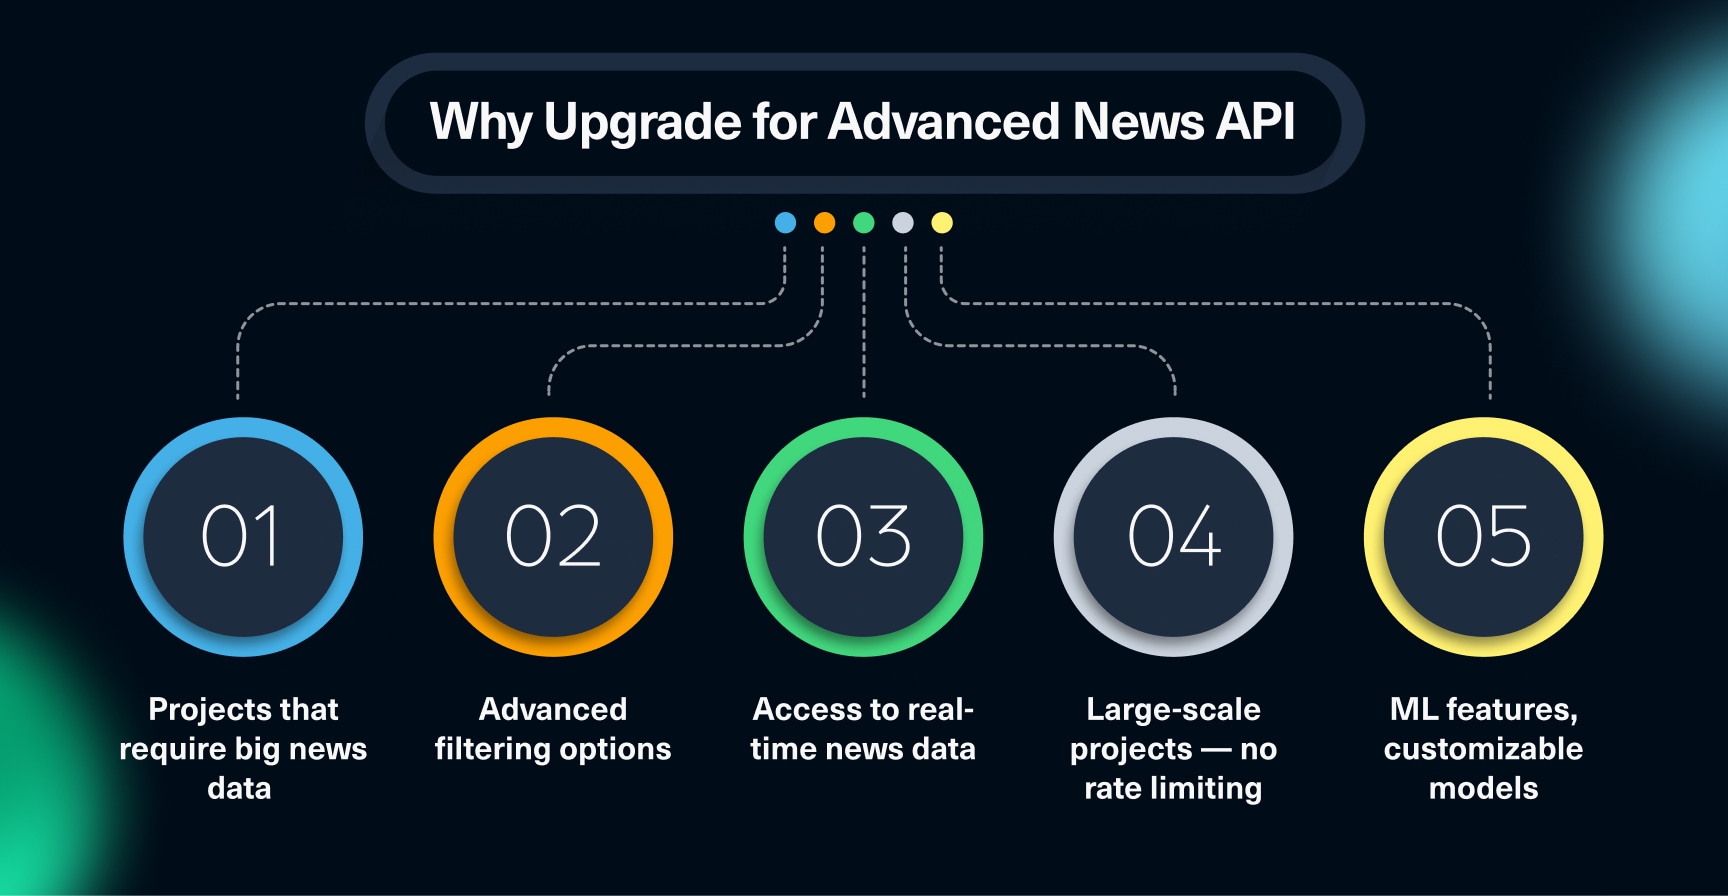 Why upgrade for advanced news API?